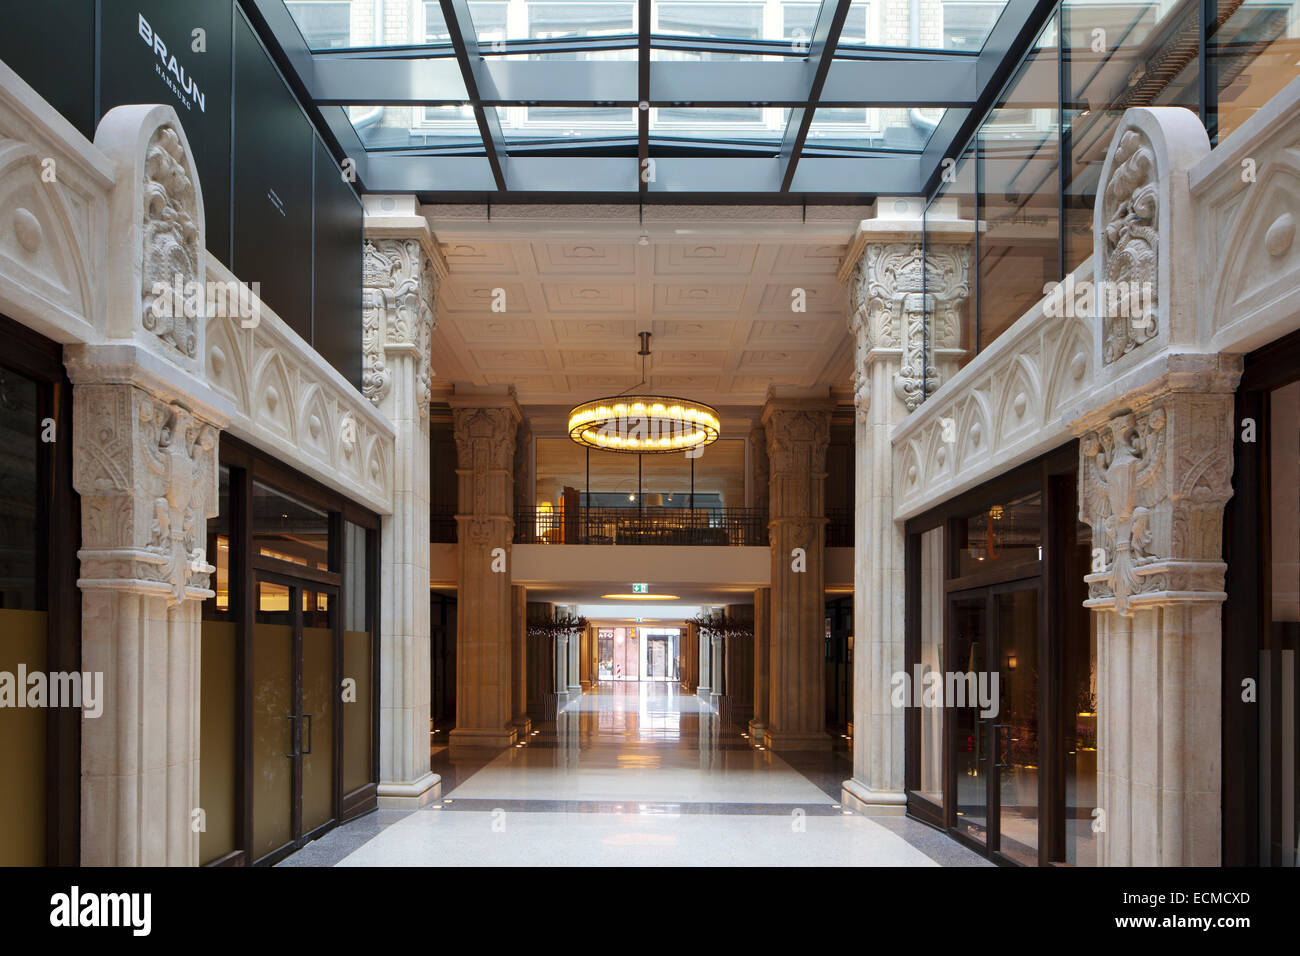 Kaisergalerie Mall Atrium With Terrazzo Floor Renovated Coffered